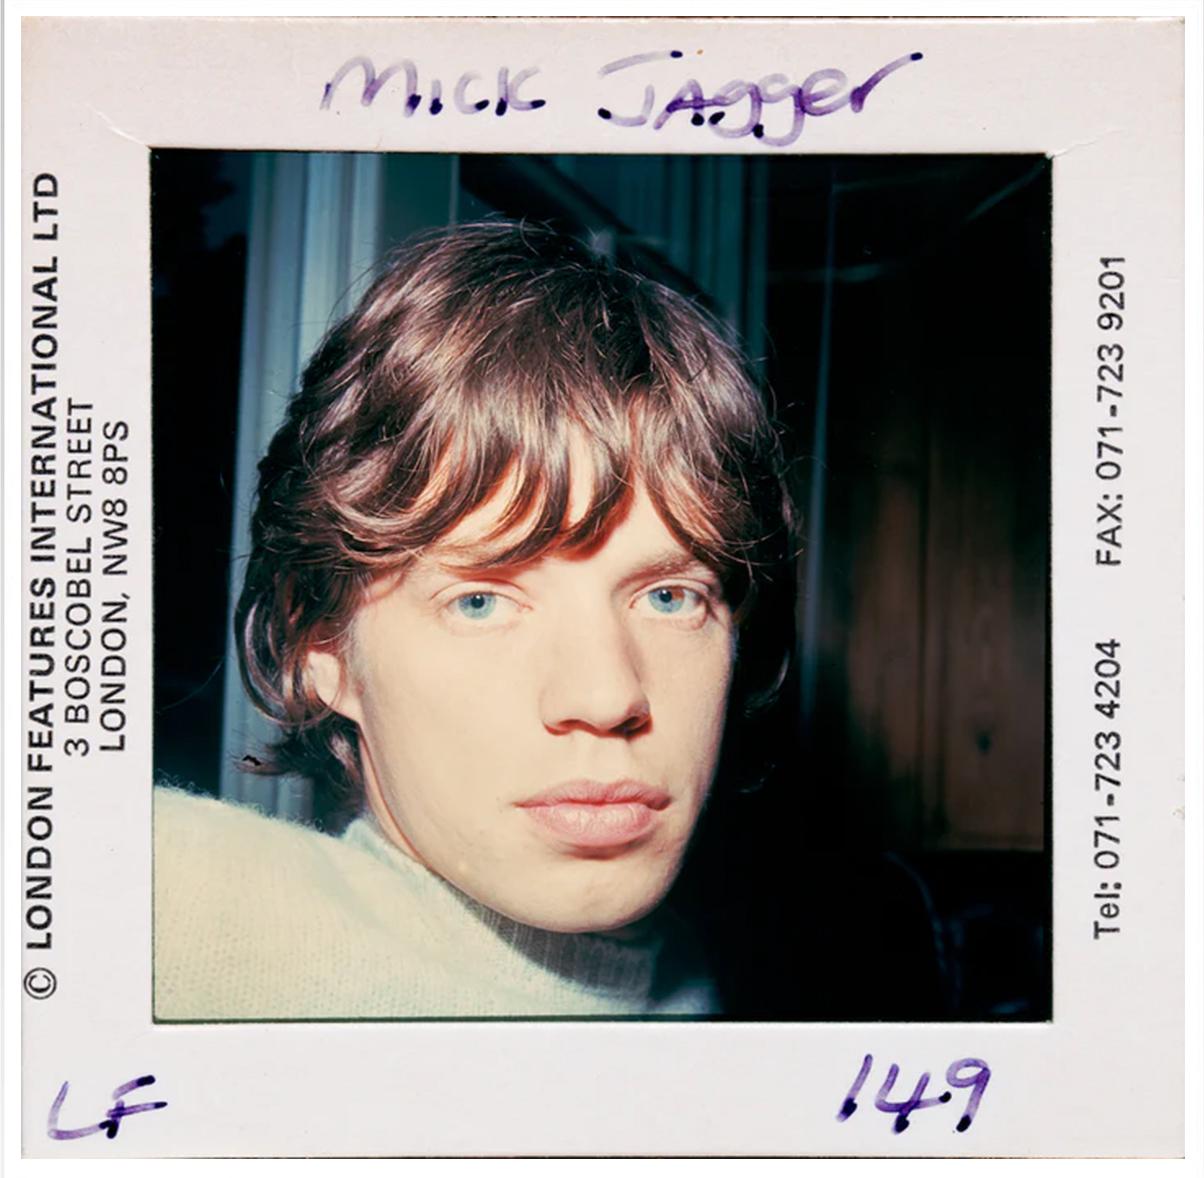 Jeff Hochberg Portrait Photograph – Mick Jagger 1965 Limitierte Auflage 